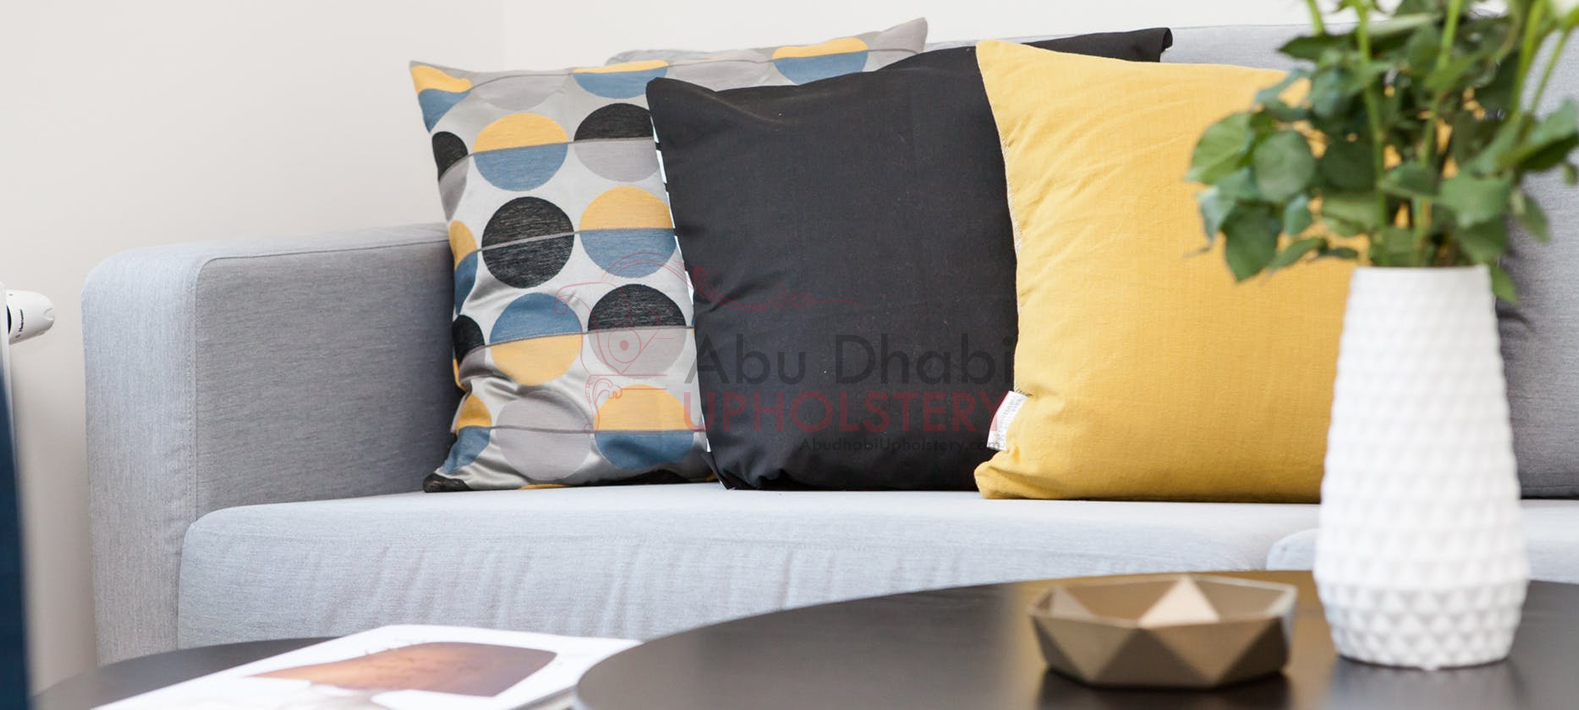 Cushions Abu Dhabi - Buy Best Sofa, Cushions in UAE 2020